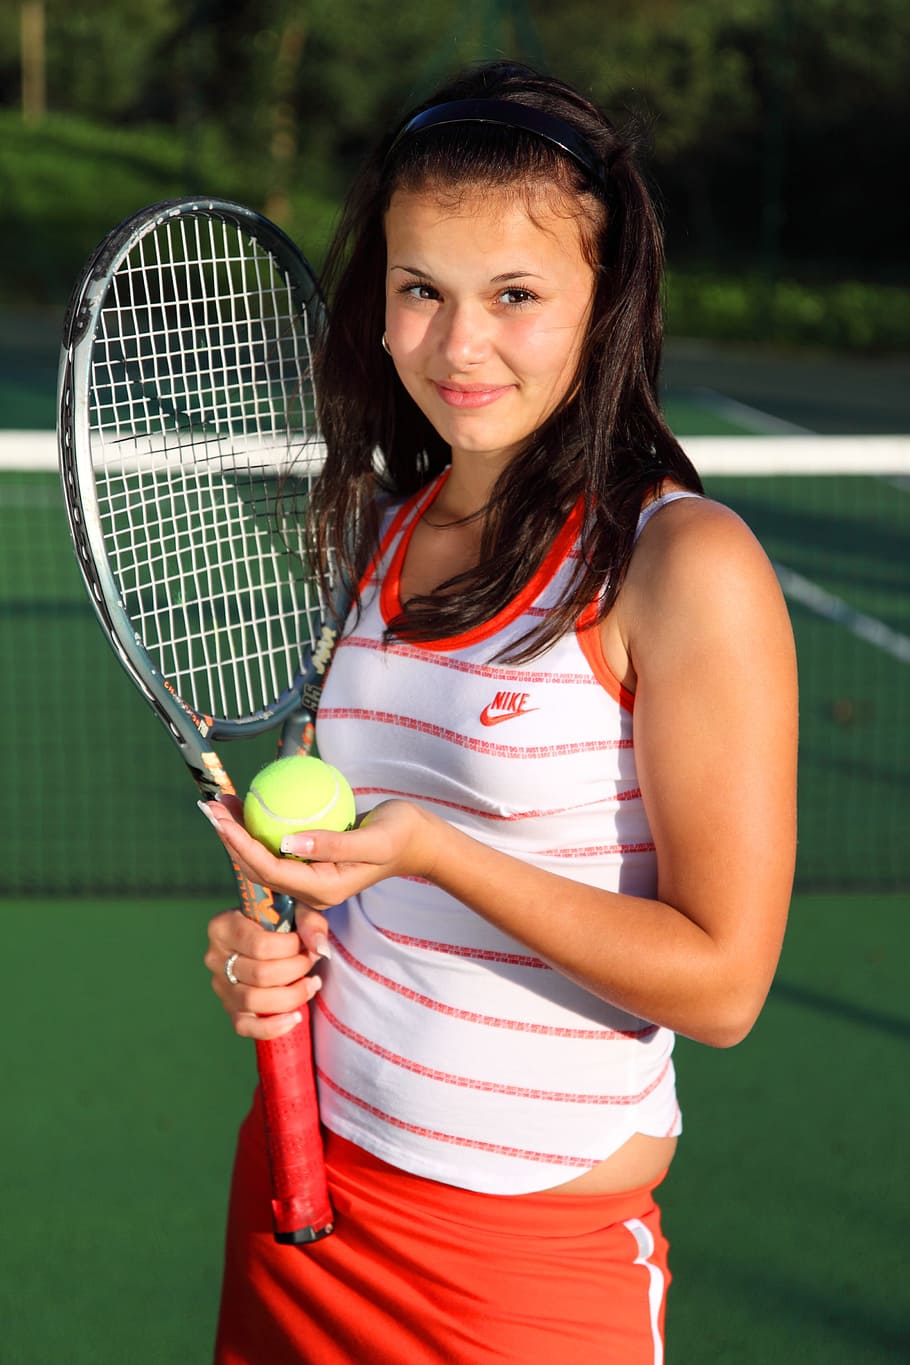 woman wearing white and orange Nike tank top and holding tennis racket